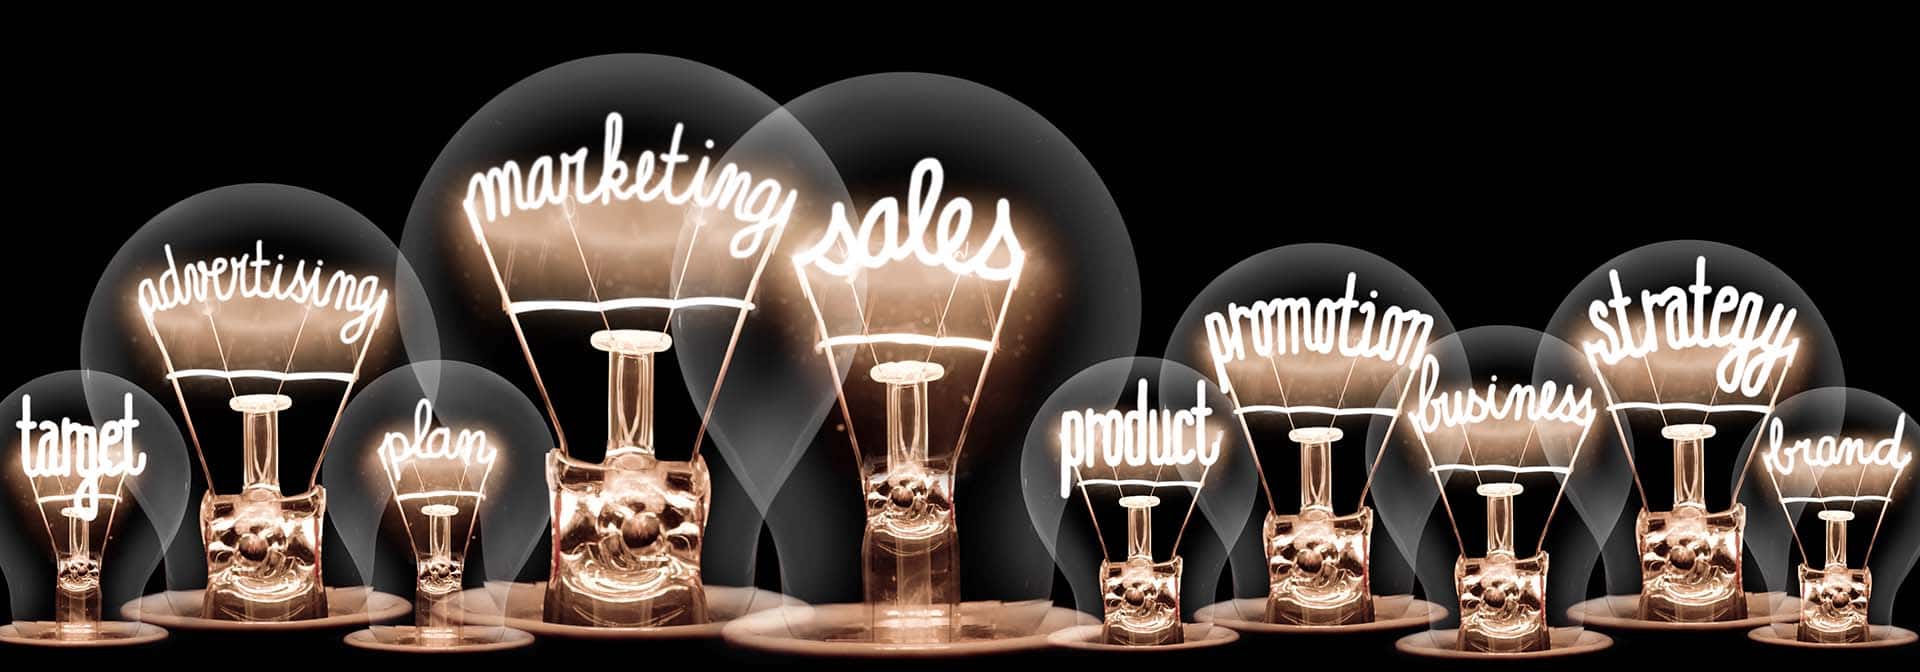 Lightbulbs with key branding and marketing words inside